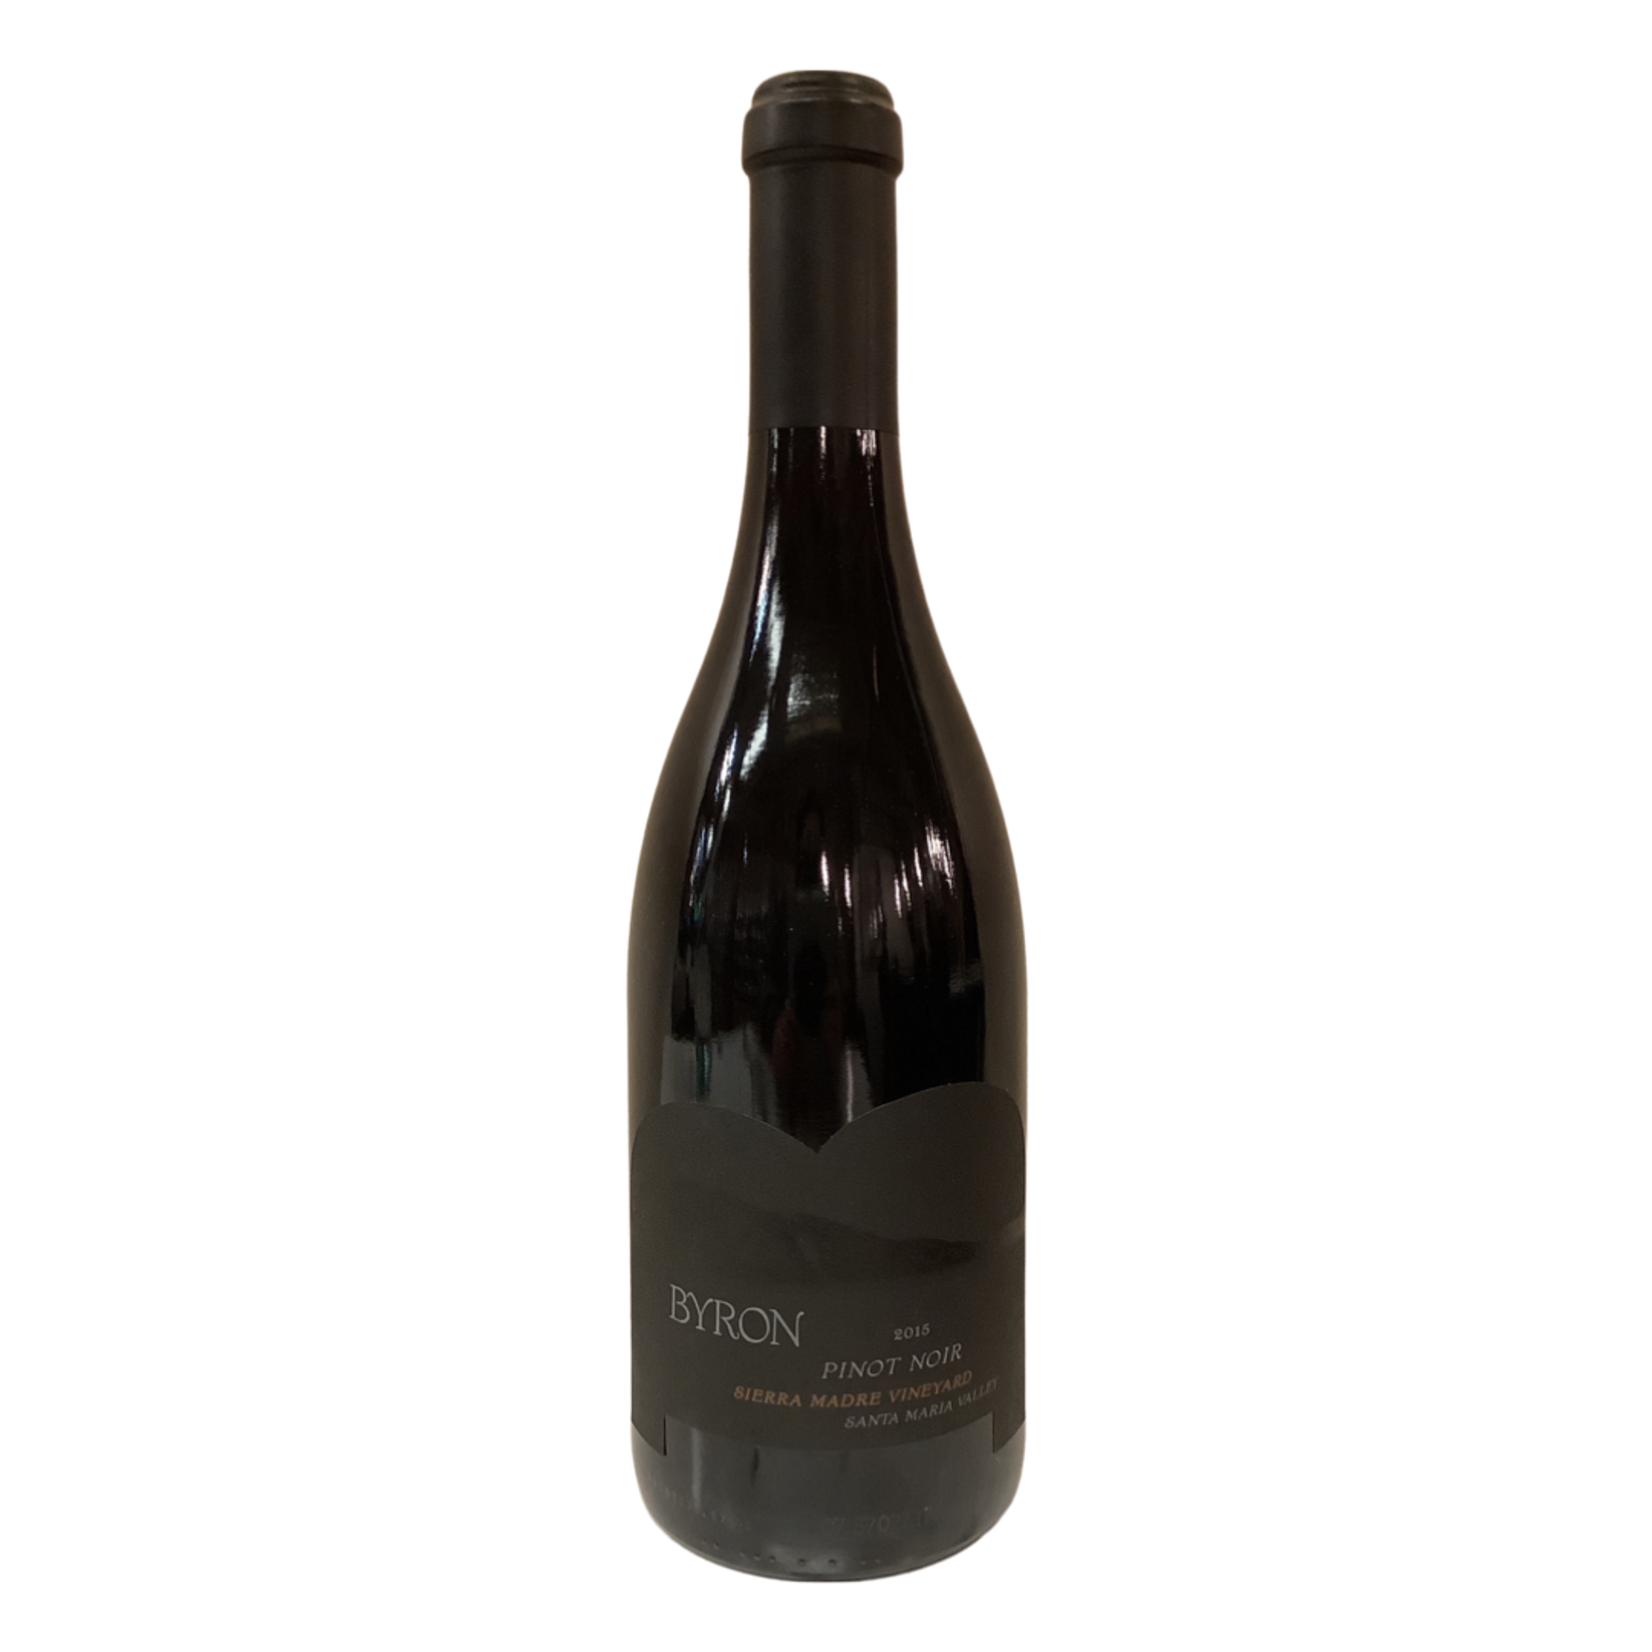 2015 Byron "Sierra Madre Vineyard" Pinot Noir, Santa Maria Valley CA